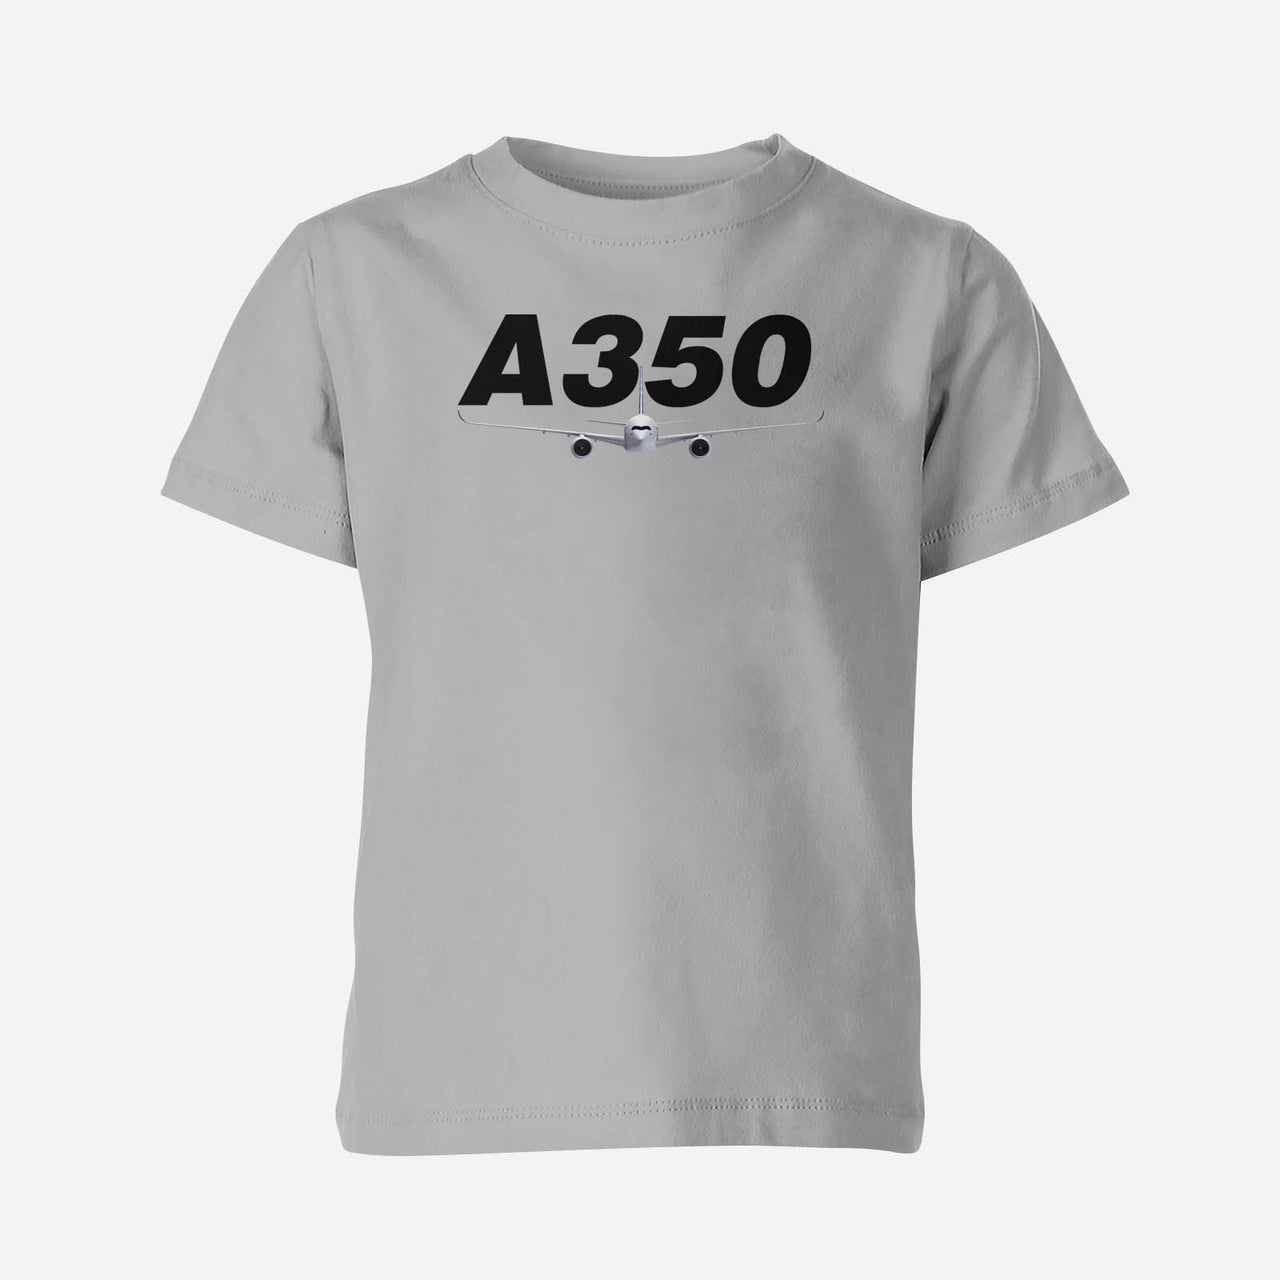 Super Airbus A350 Designed Children T-Shirts